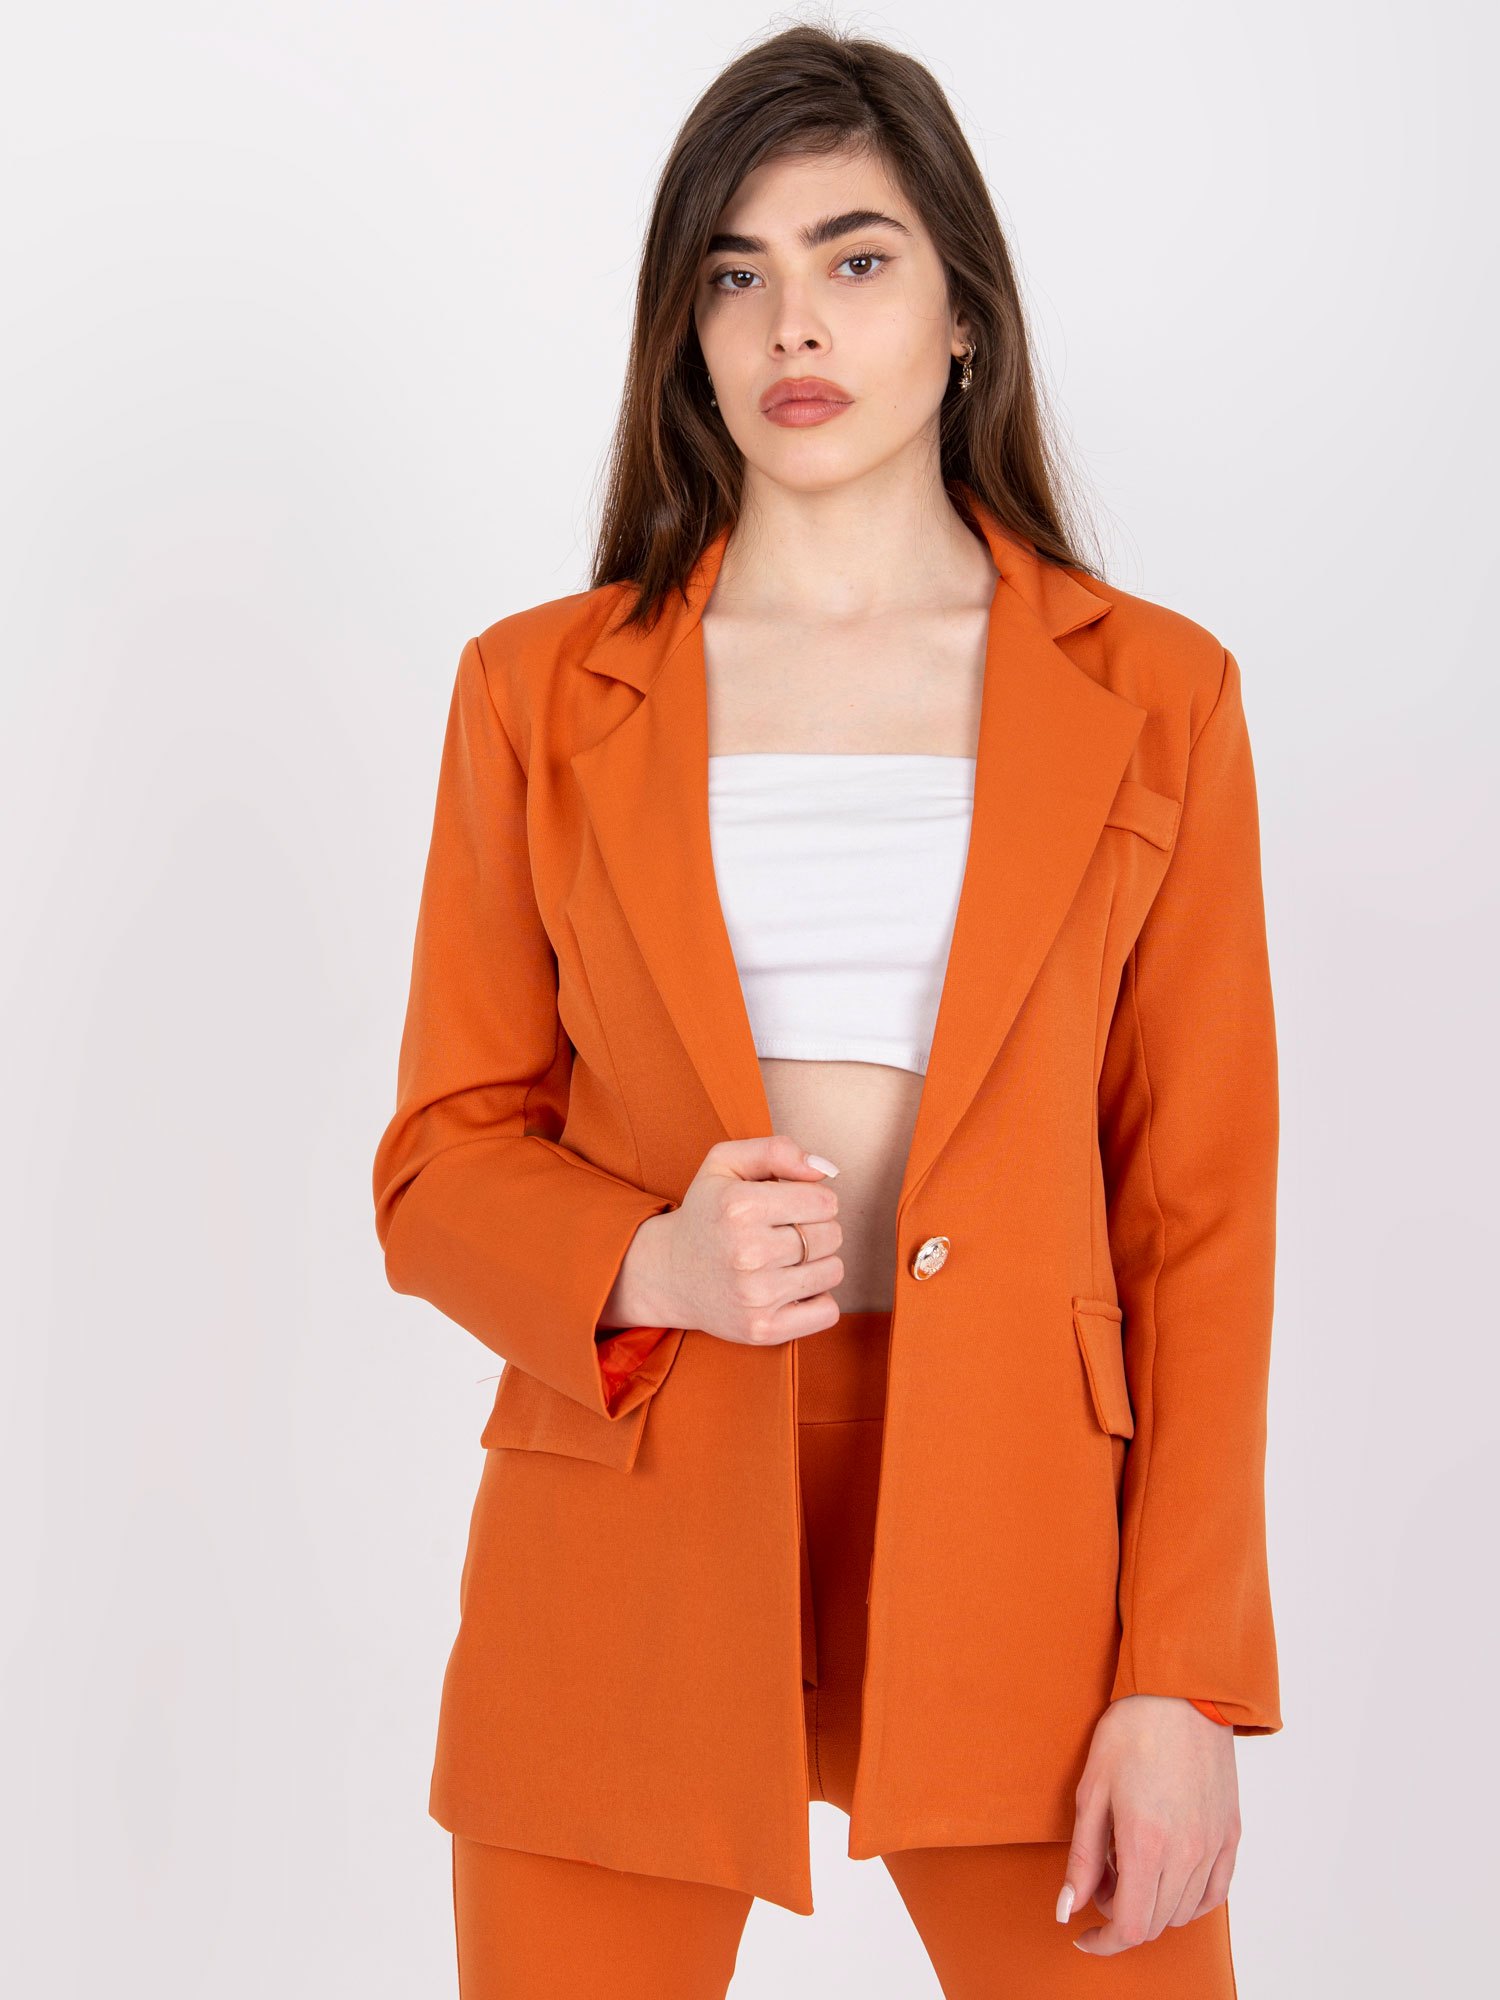 Dark orange elegant jacket from Veracruz